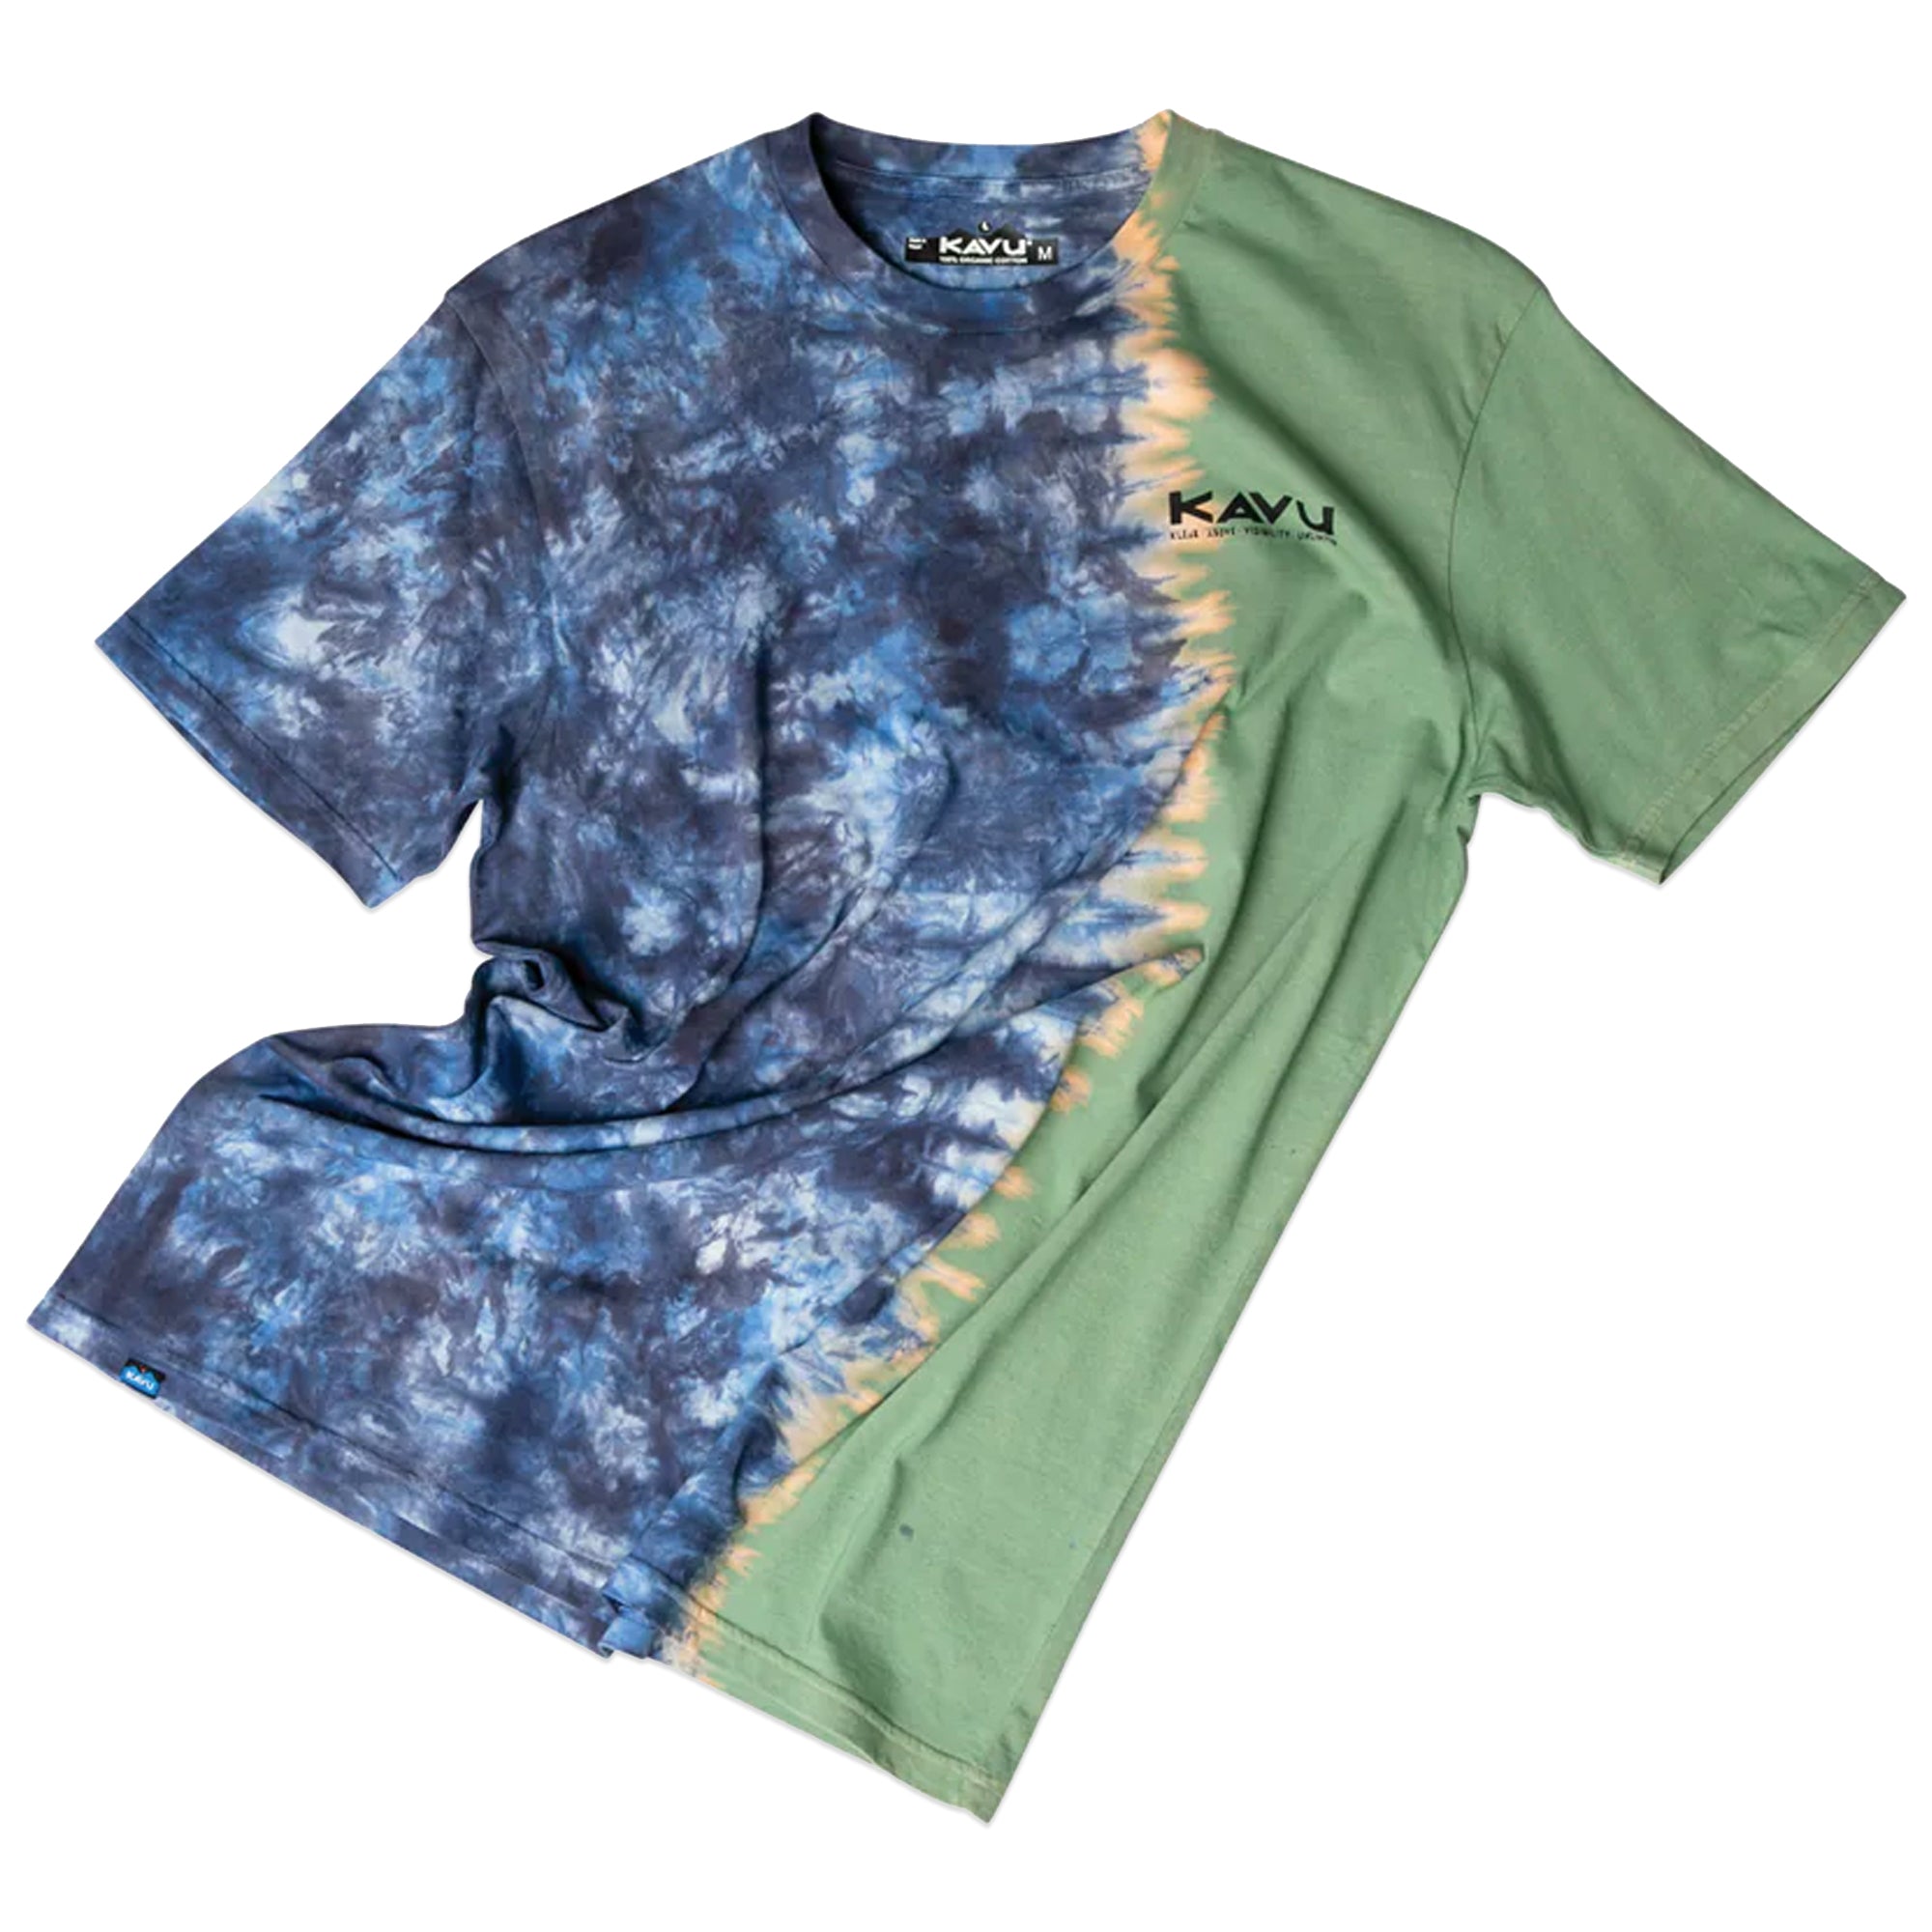 KAVU Klear Above Etch Art T-Shirt - Stormy Seas